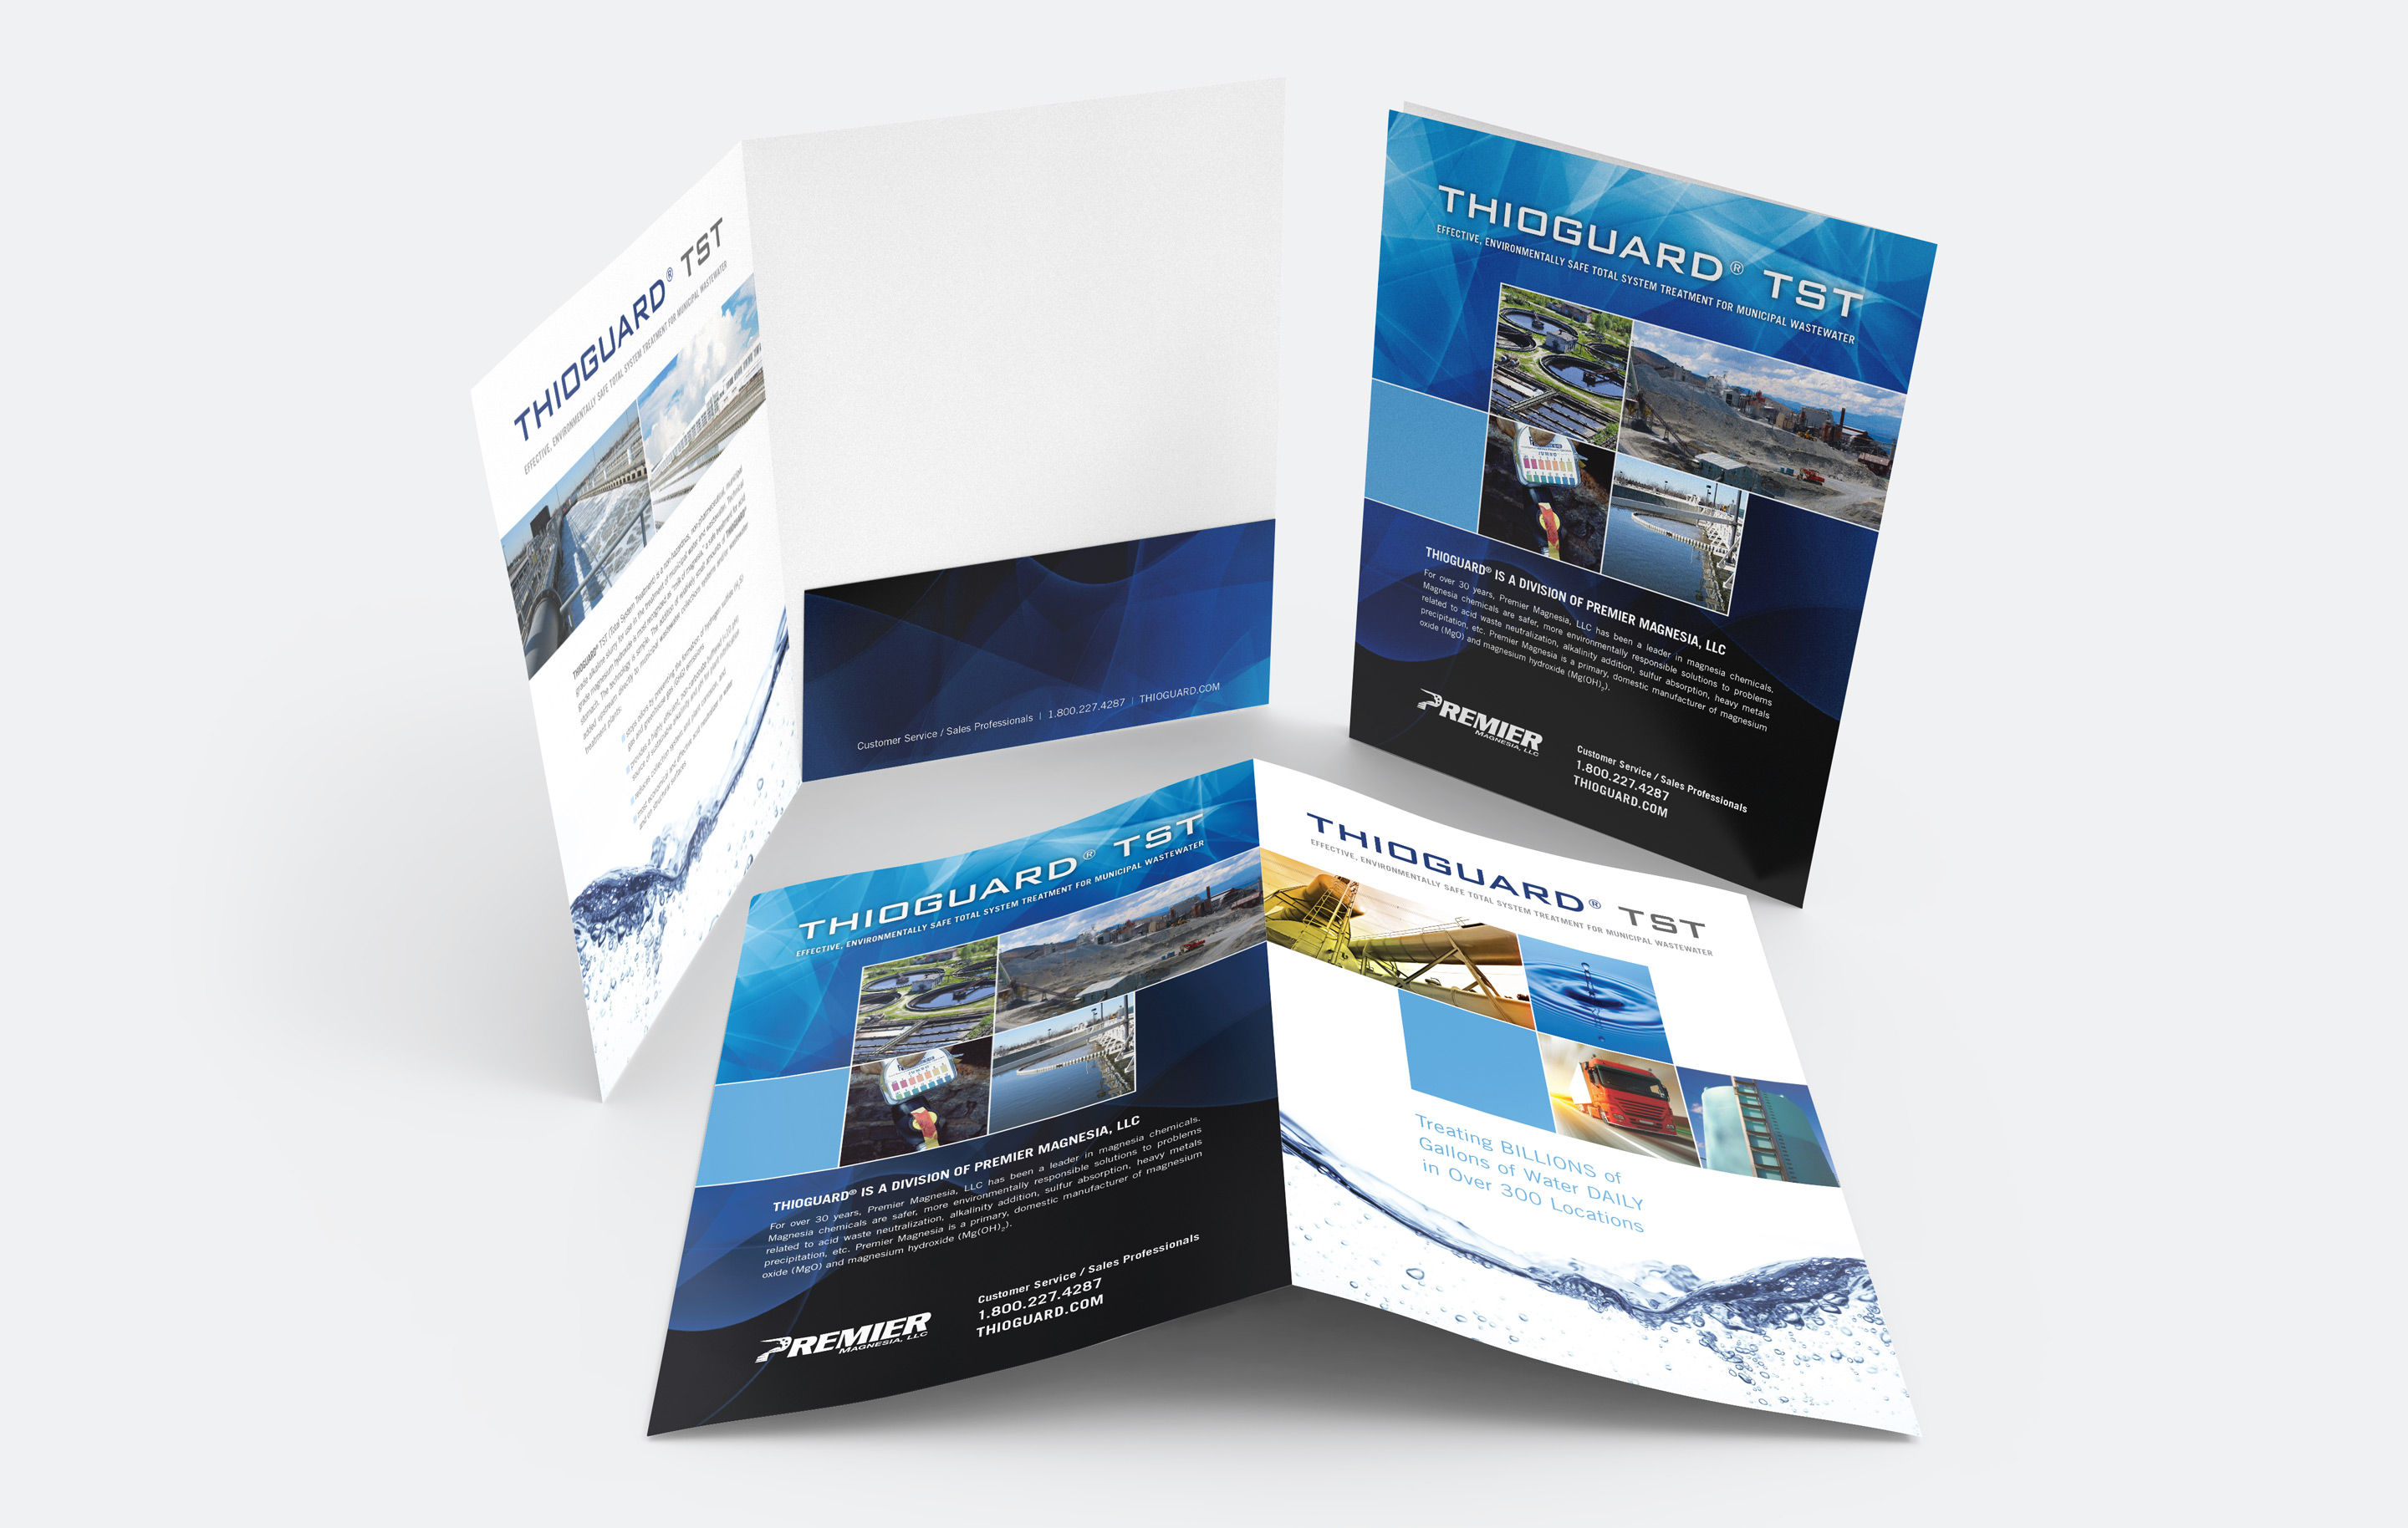 Thioguard TST brochure folder design by advertising agency in Philadelphia